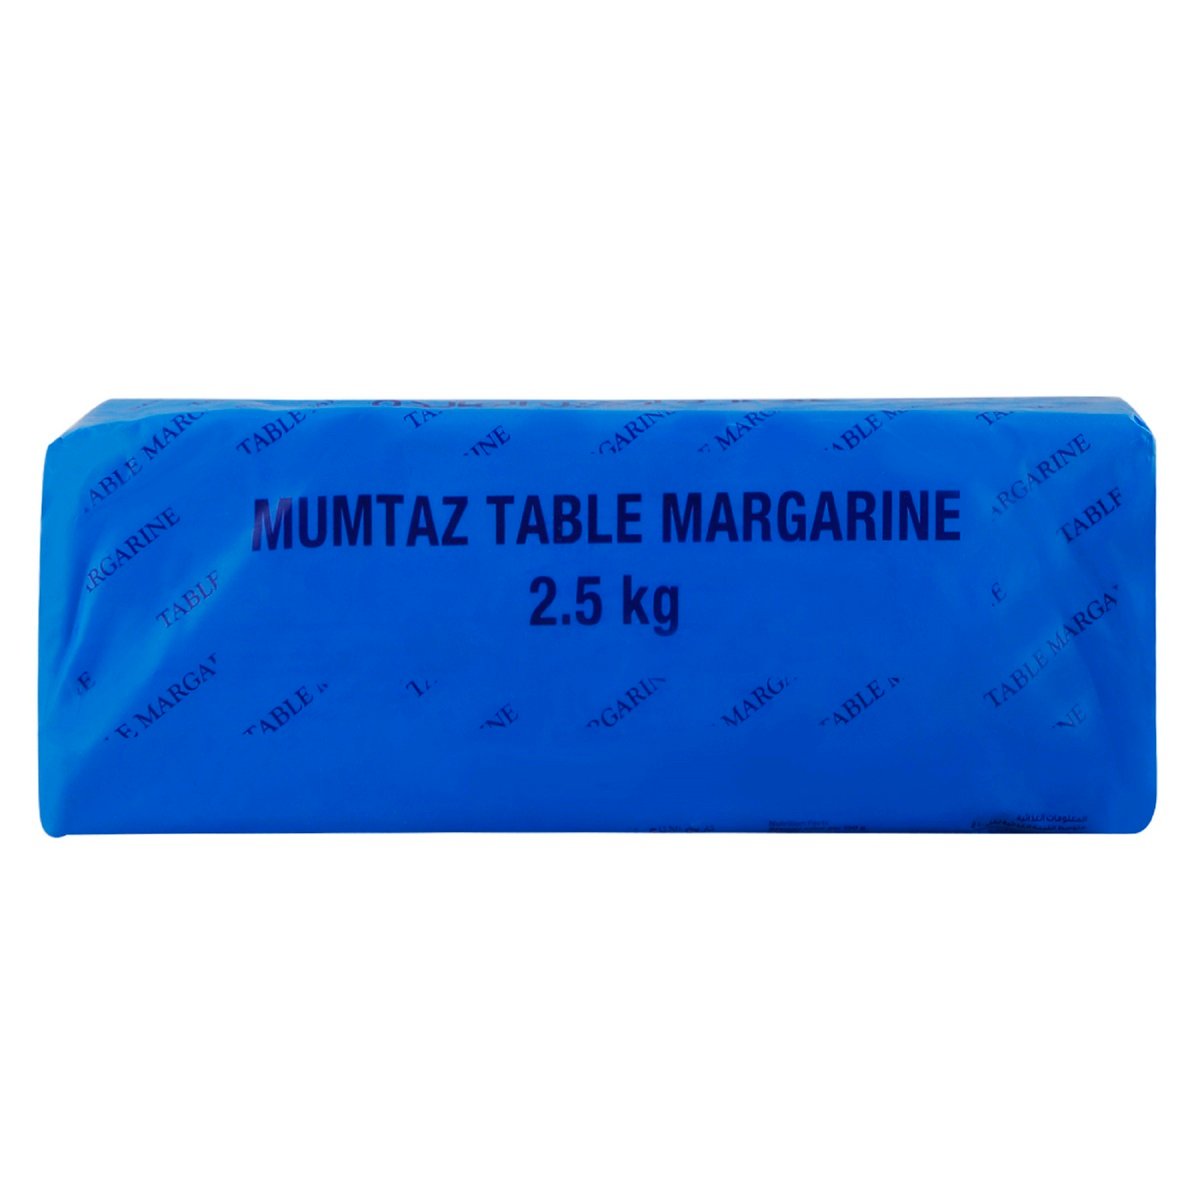 Mumtaz Table Margarine 2.5kg